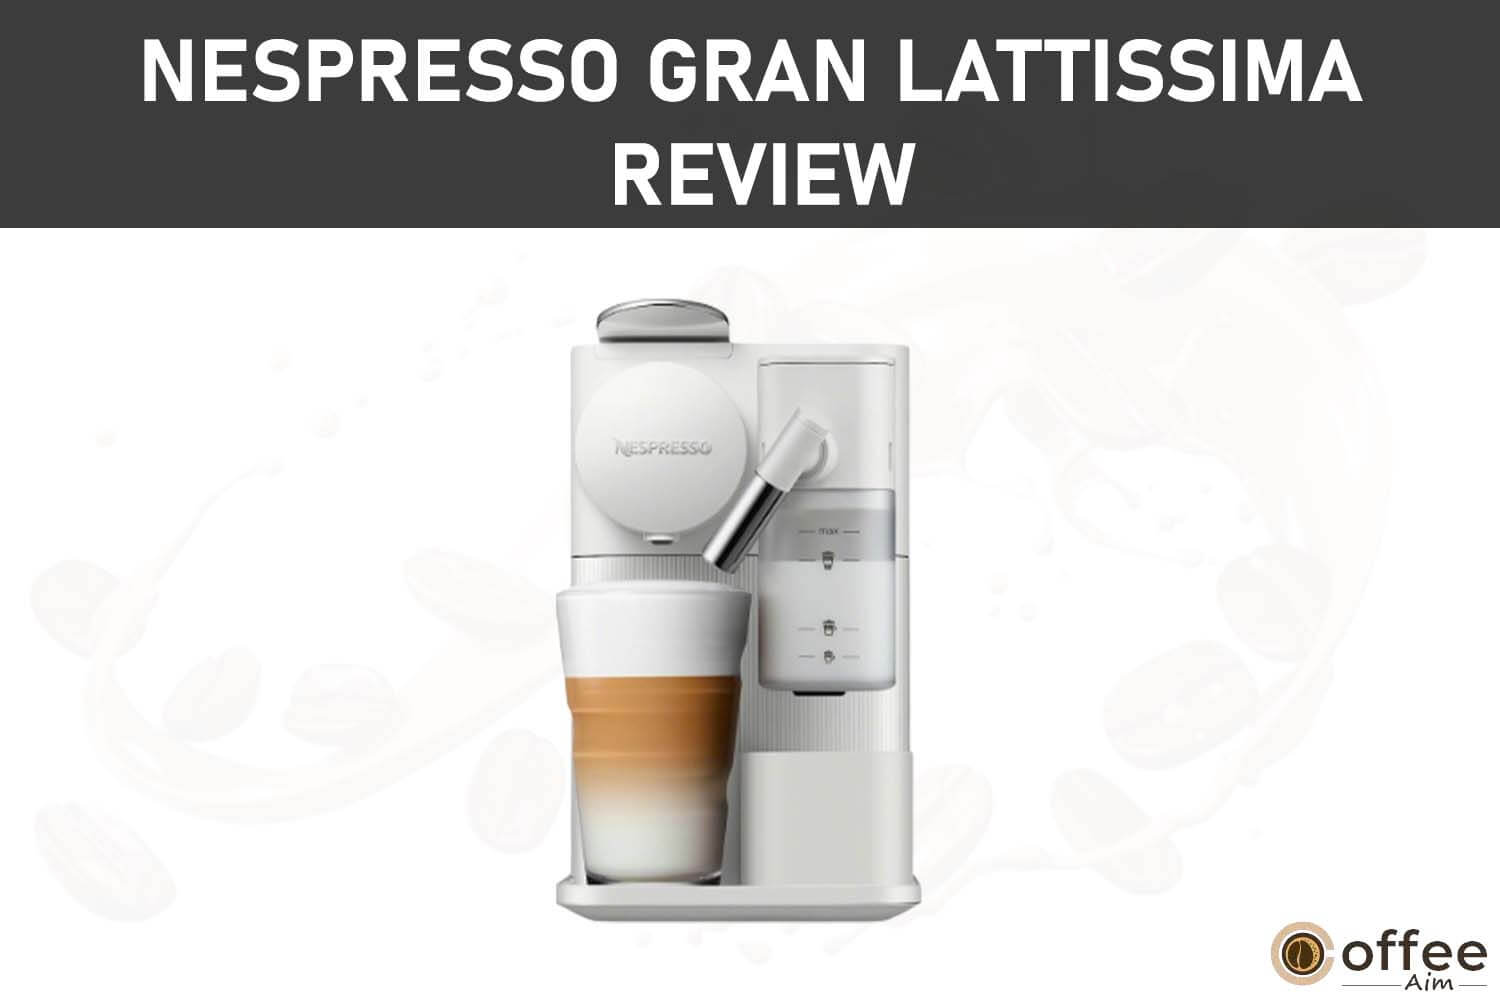 Featured image for the article "Nespresso Gran Lattissima Review"